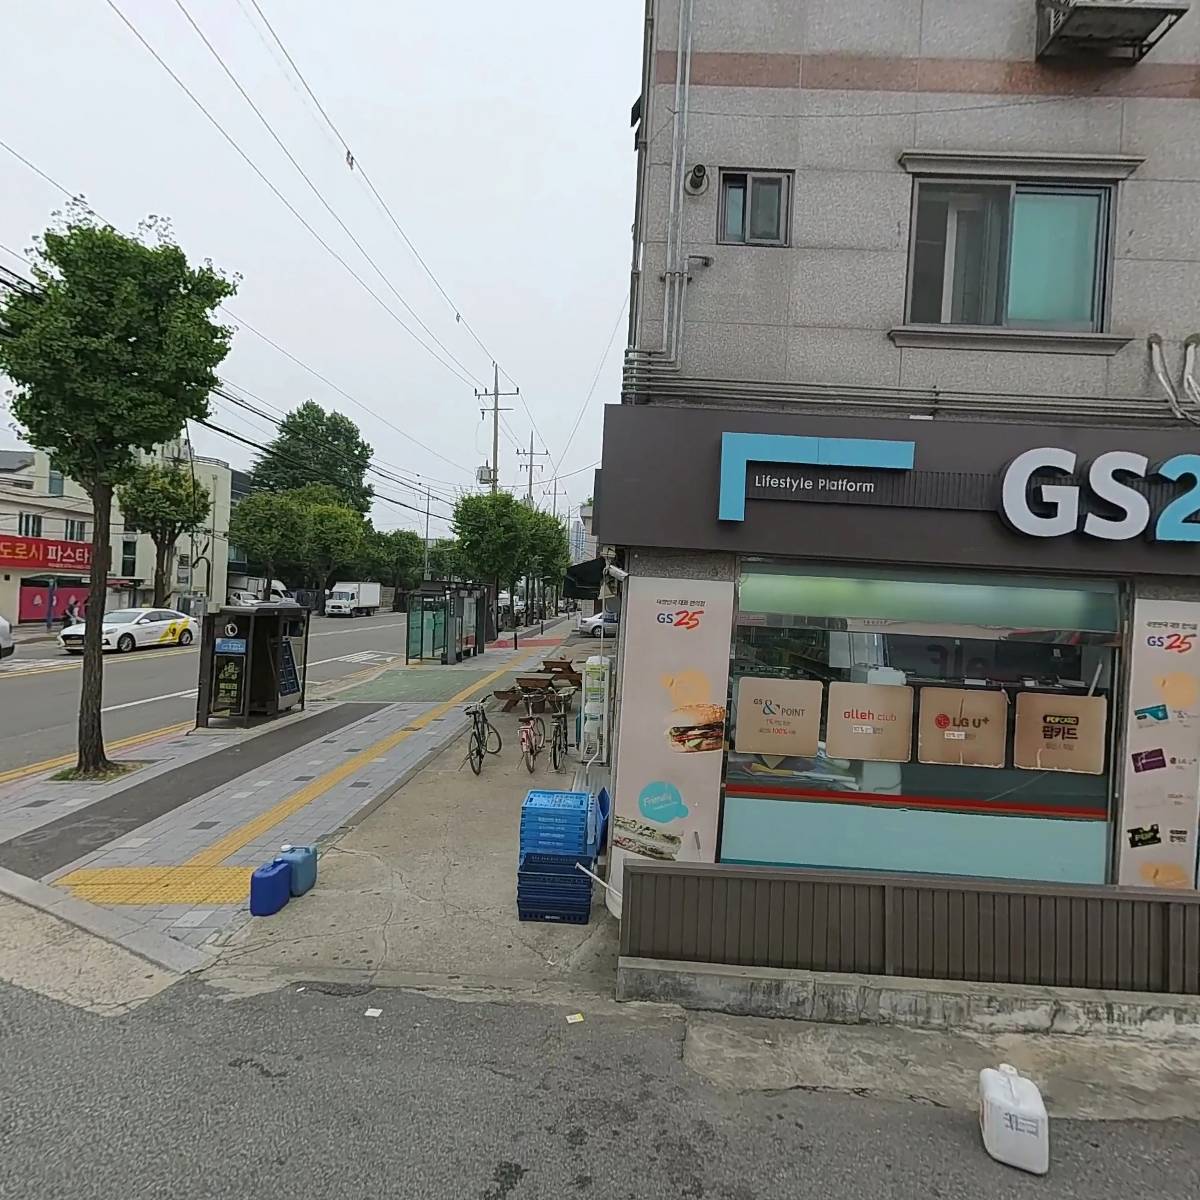 GS２５용현인하_3